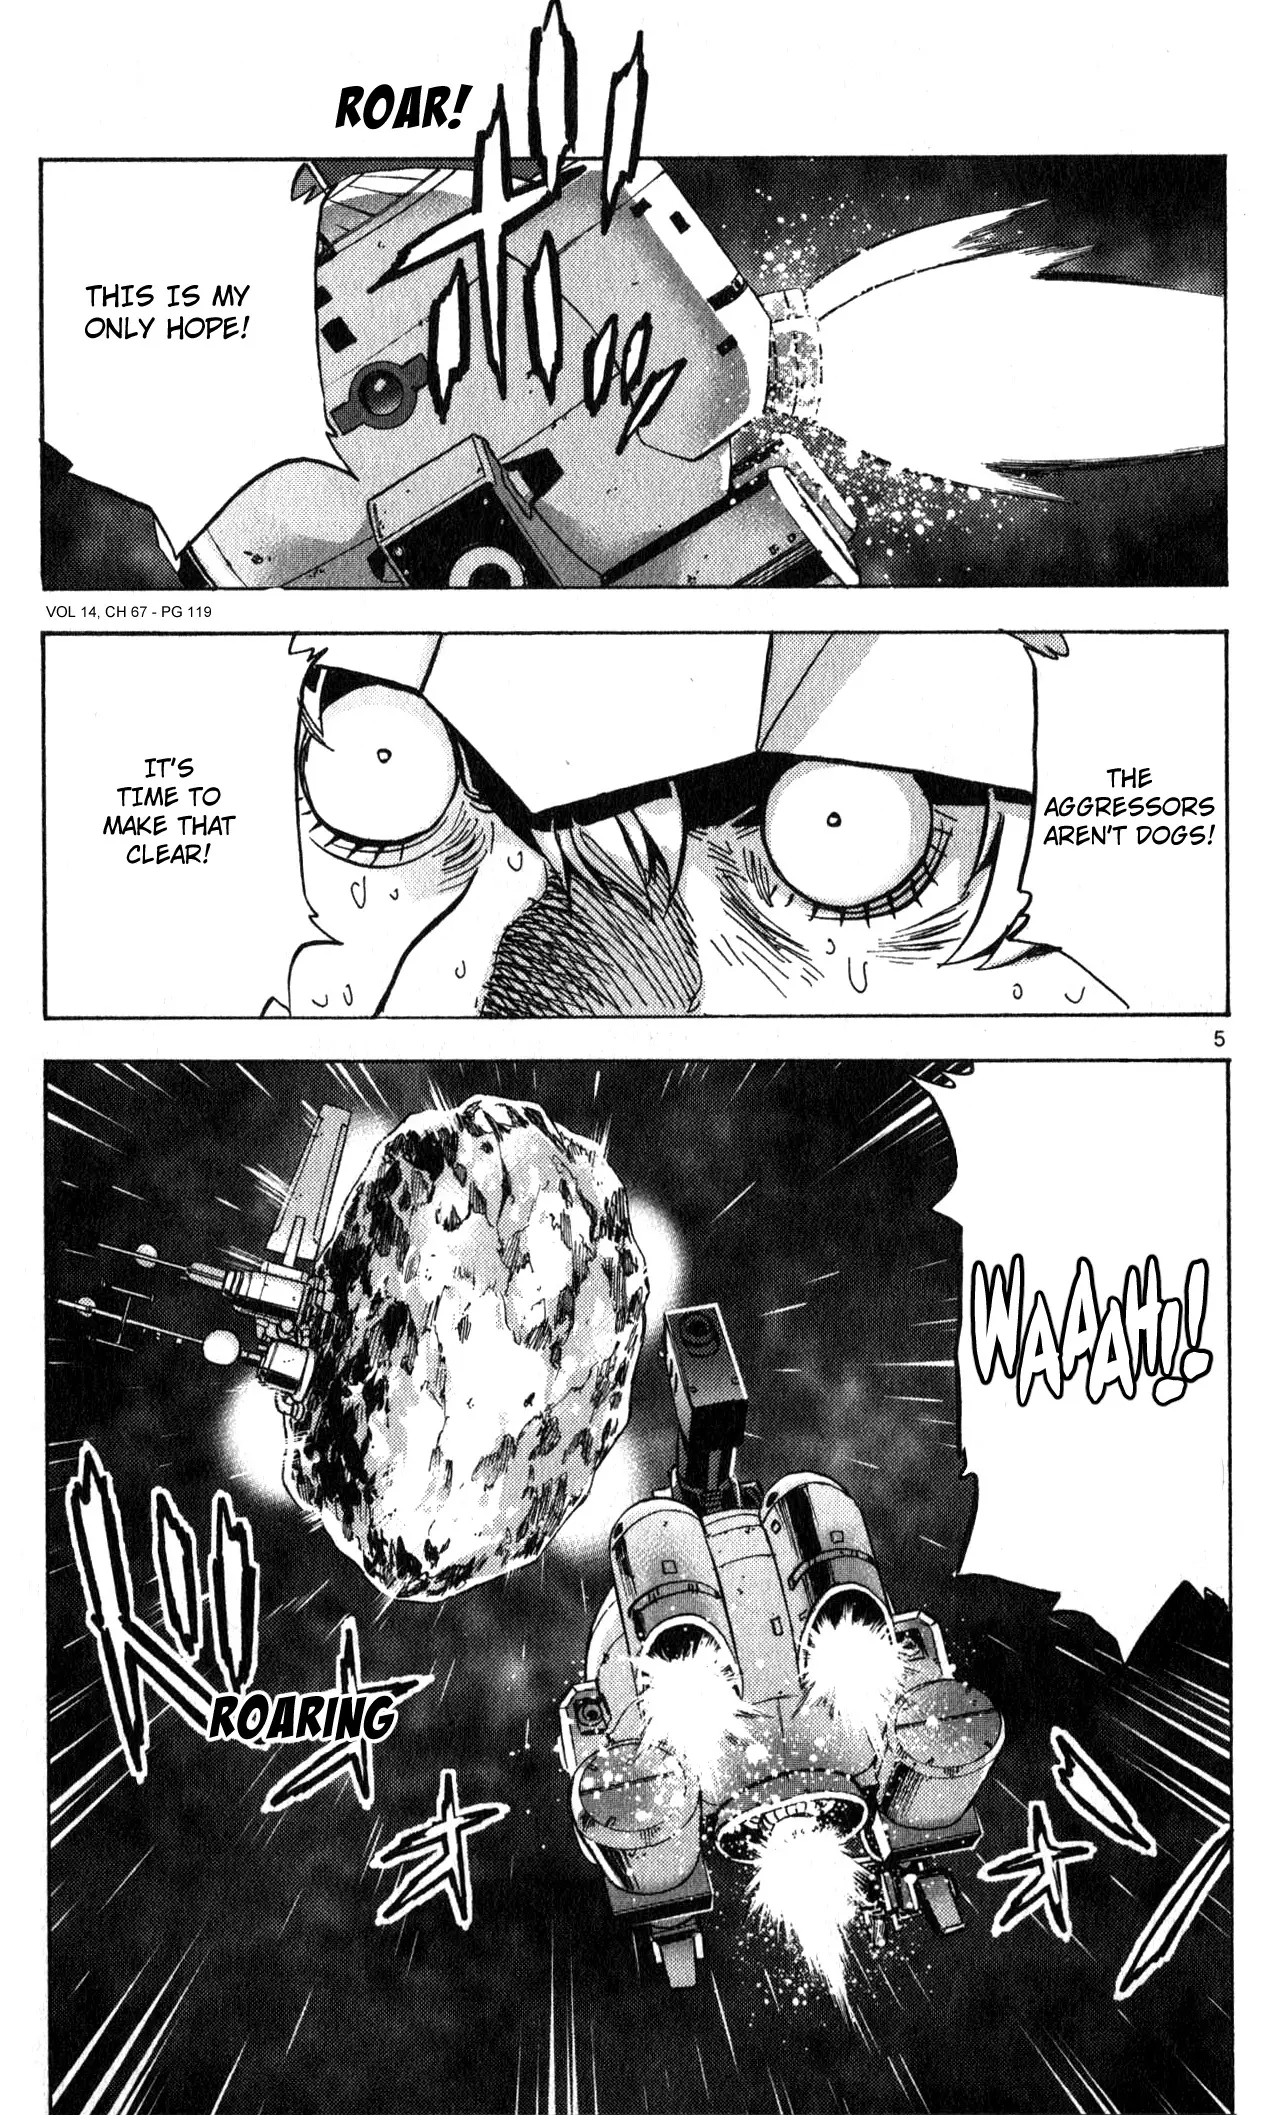 Mobile Suit Gundam Aggressor - 68 page 4-24685a11